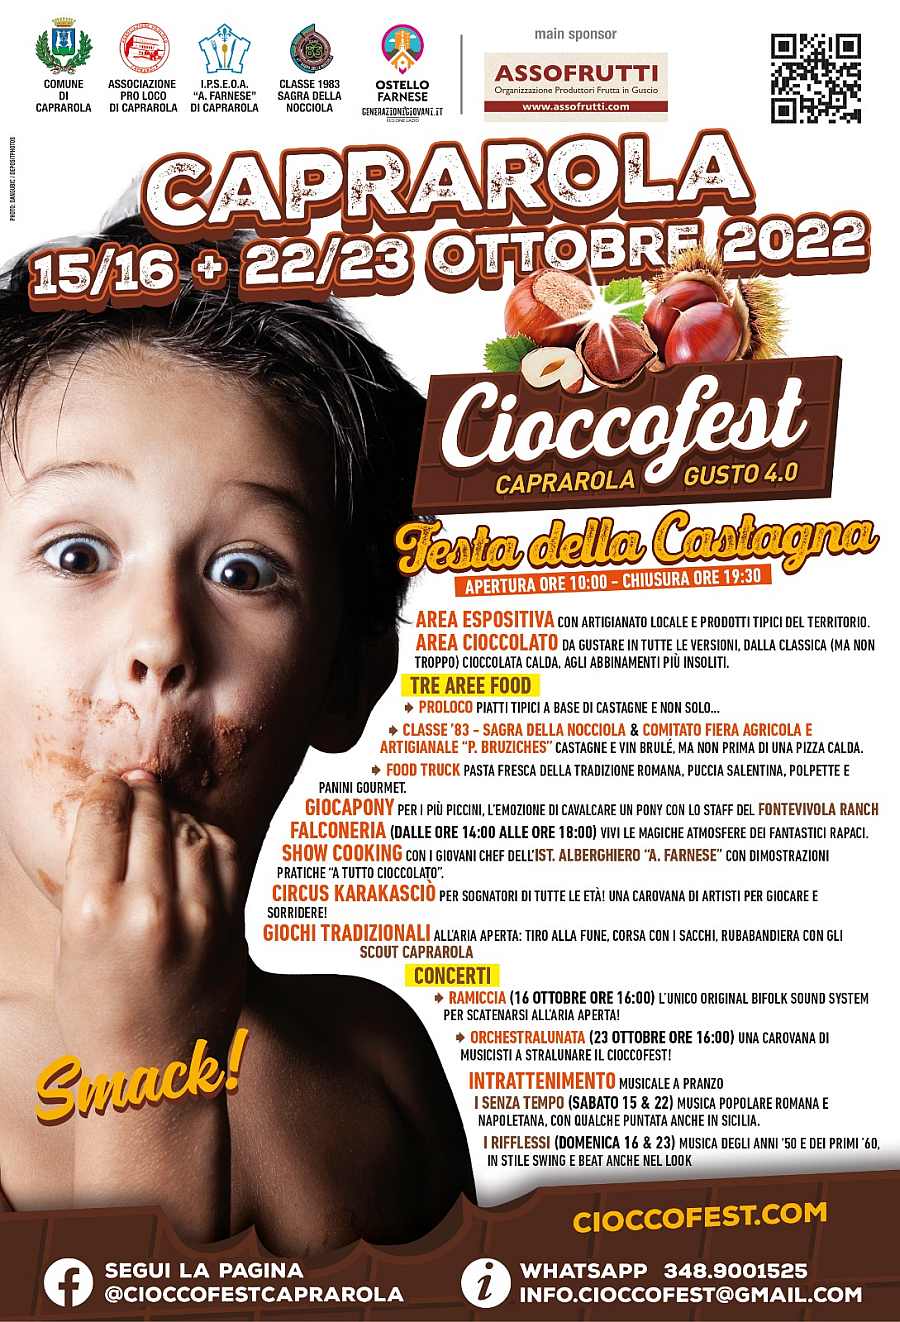 Caprarola (VT)
"CioccoFest e Festa della Castagna"
15-16 e 22-23 Ottobre 2022